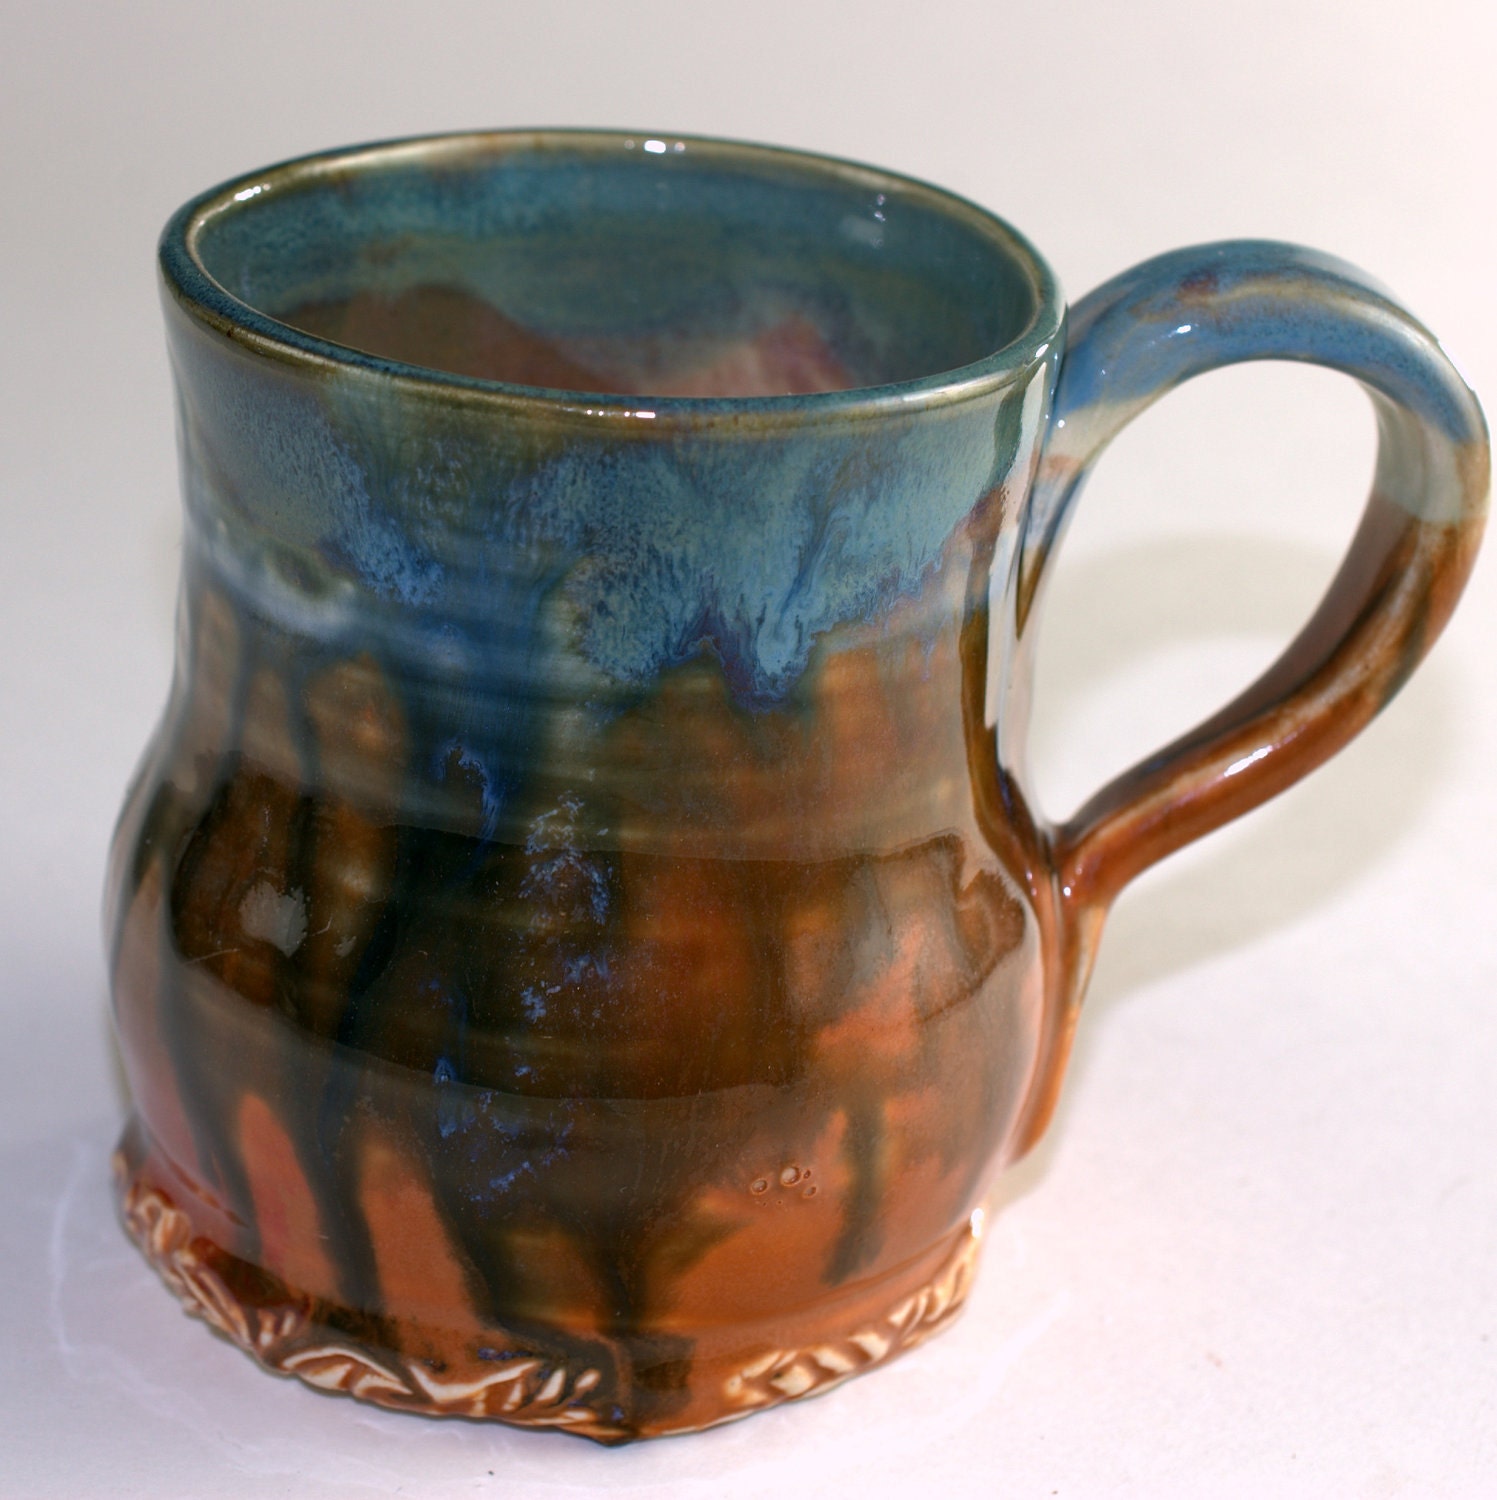 Mug Coffee 10 oz Rust and Blue Ceramic Mug, Handmade Teacup - PrimitivePots